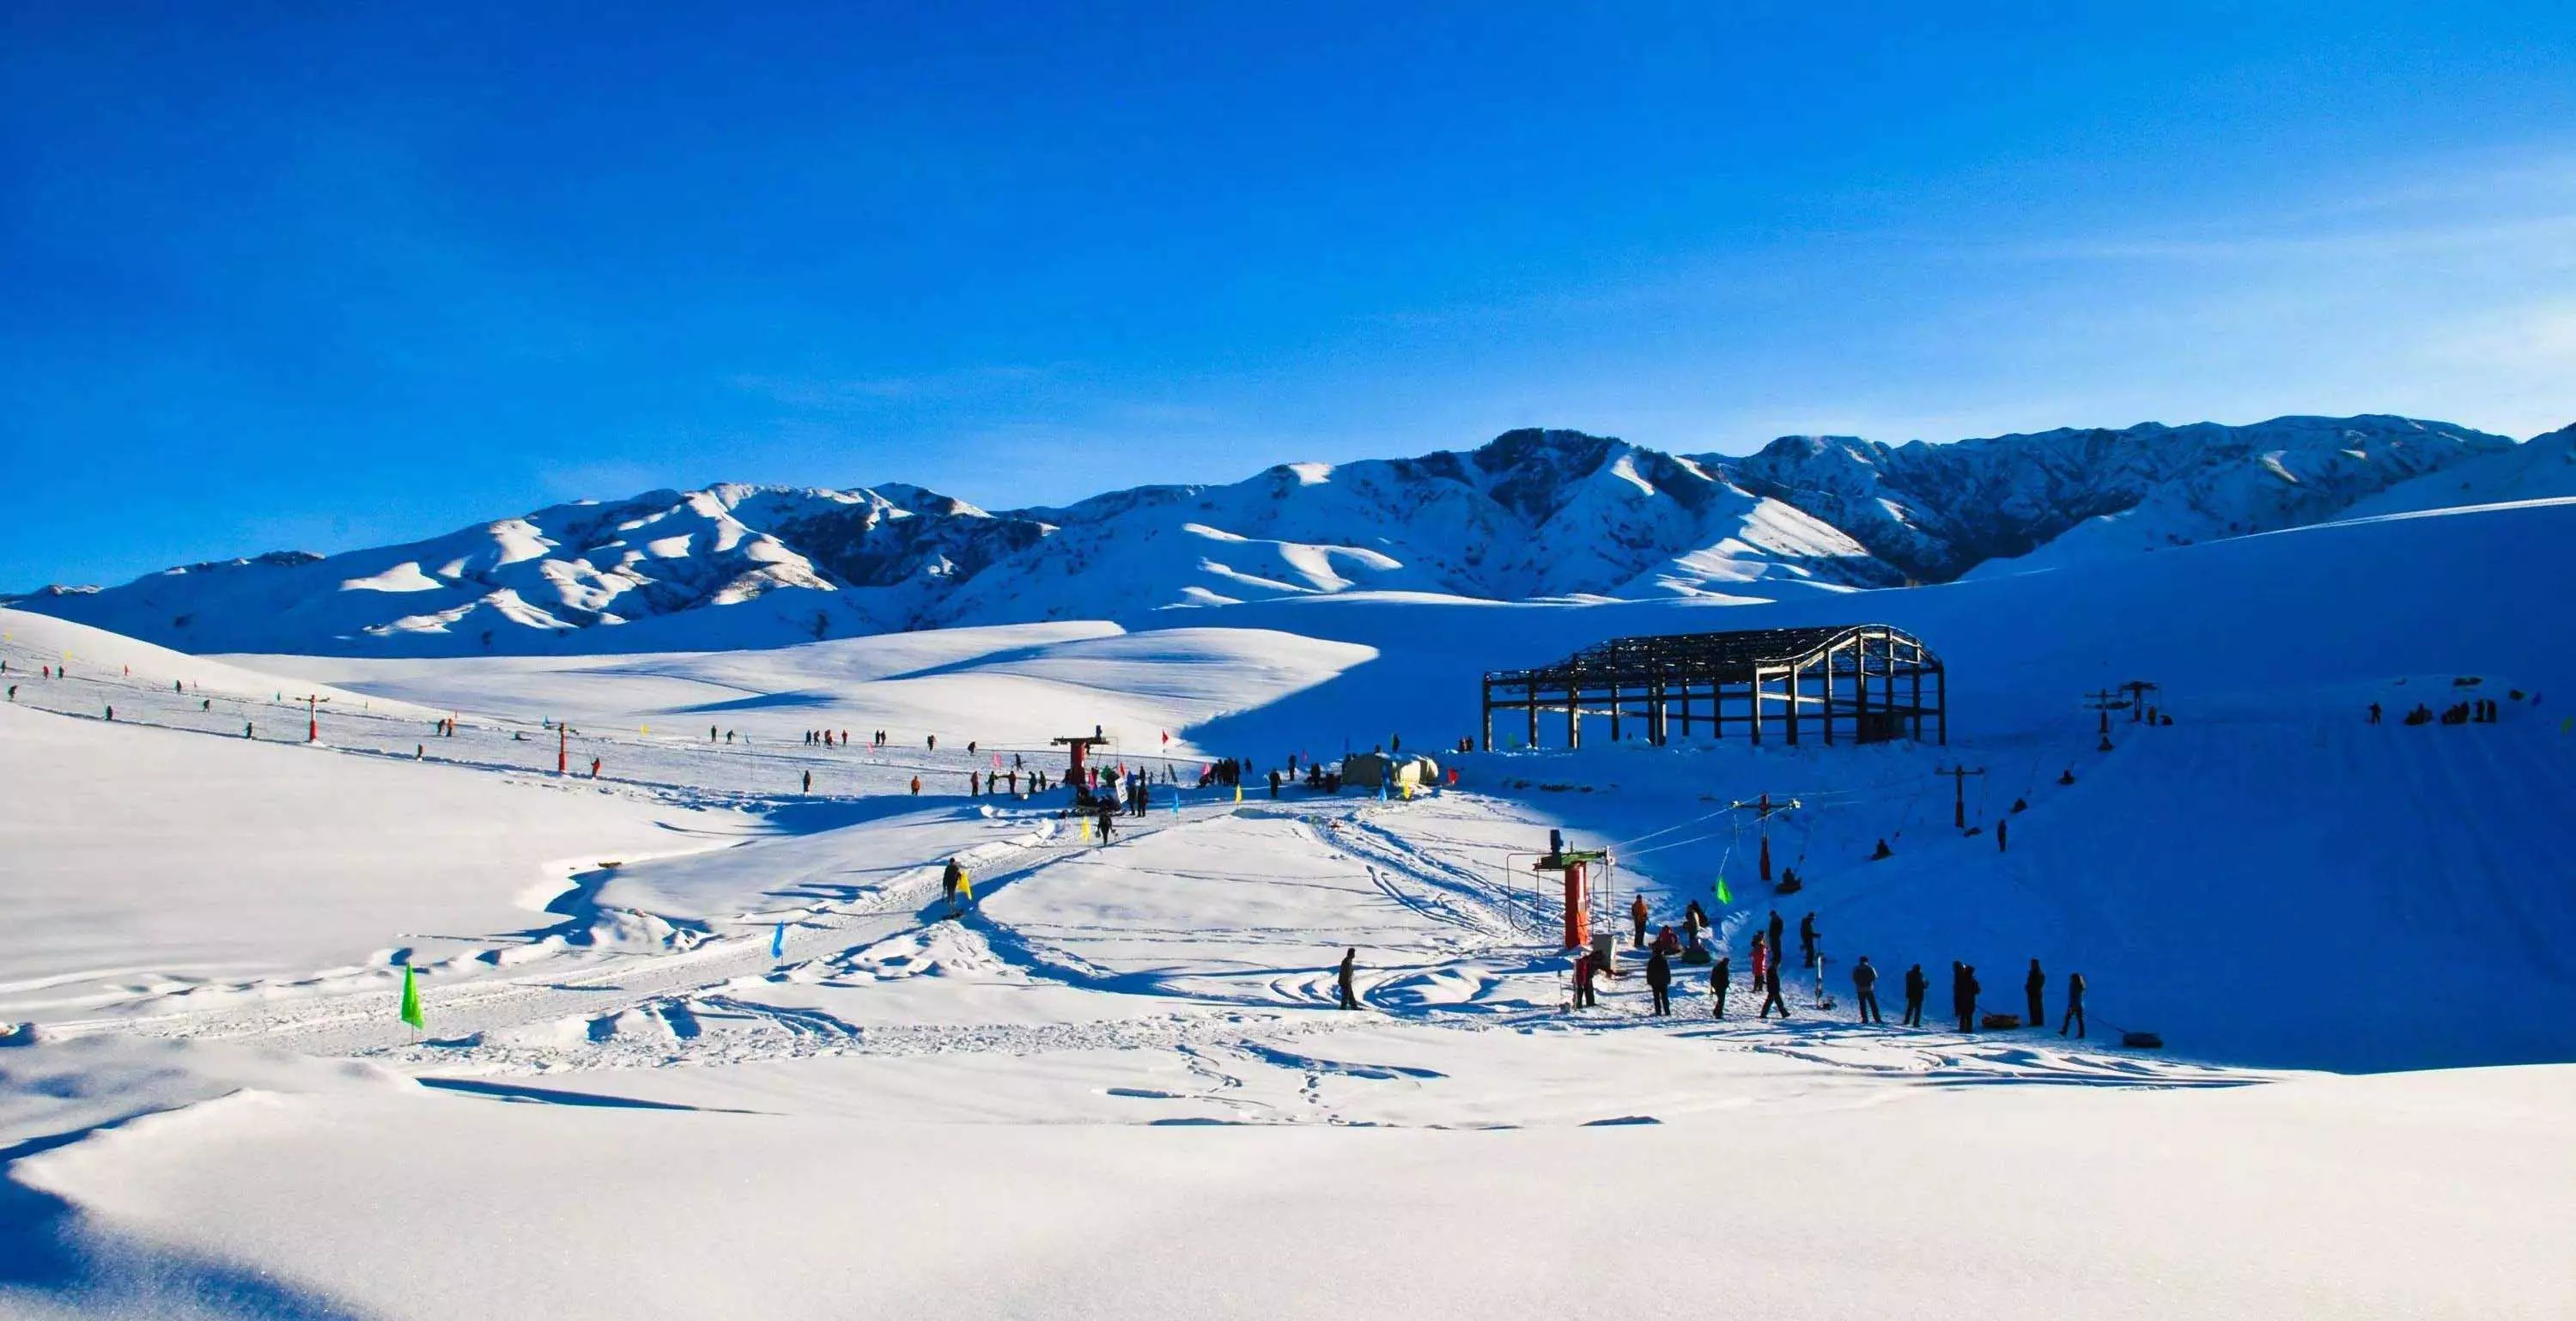 Yabuli Ski Resort in China, East Asia | Snowboarding,Skiing - Rated 3.3